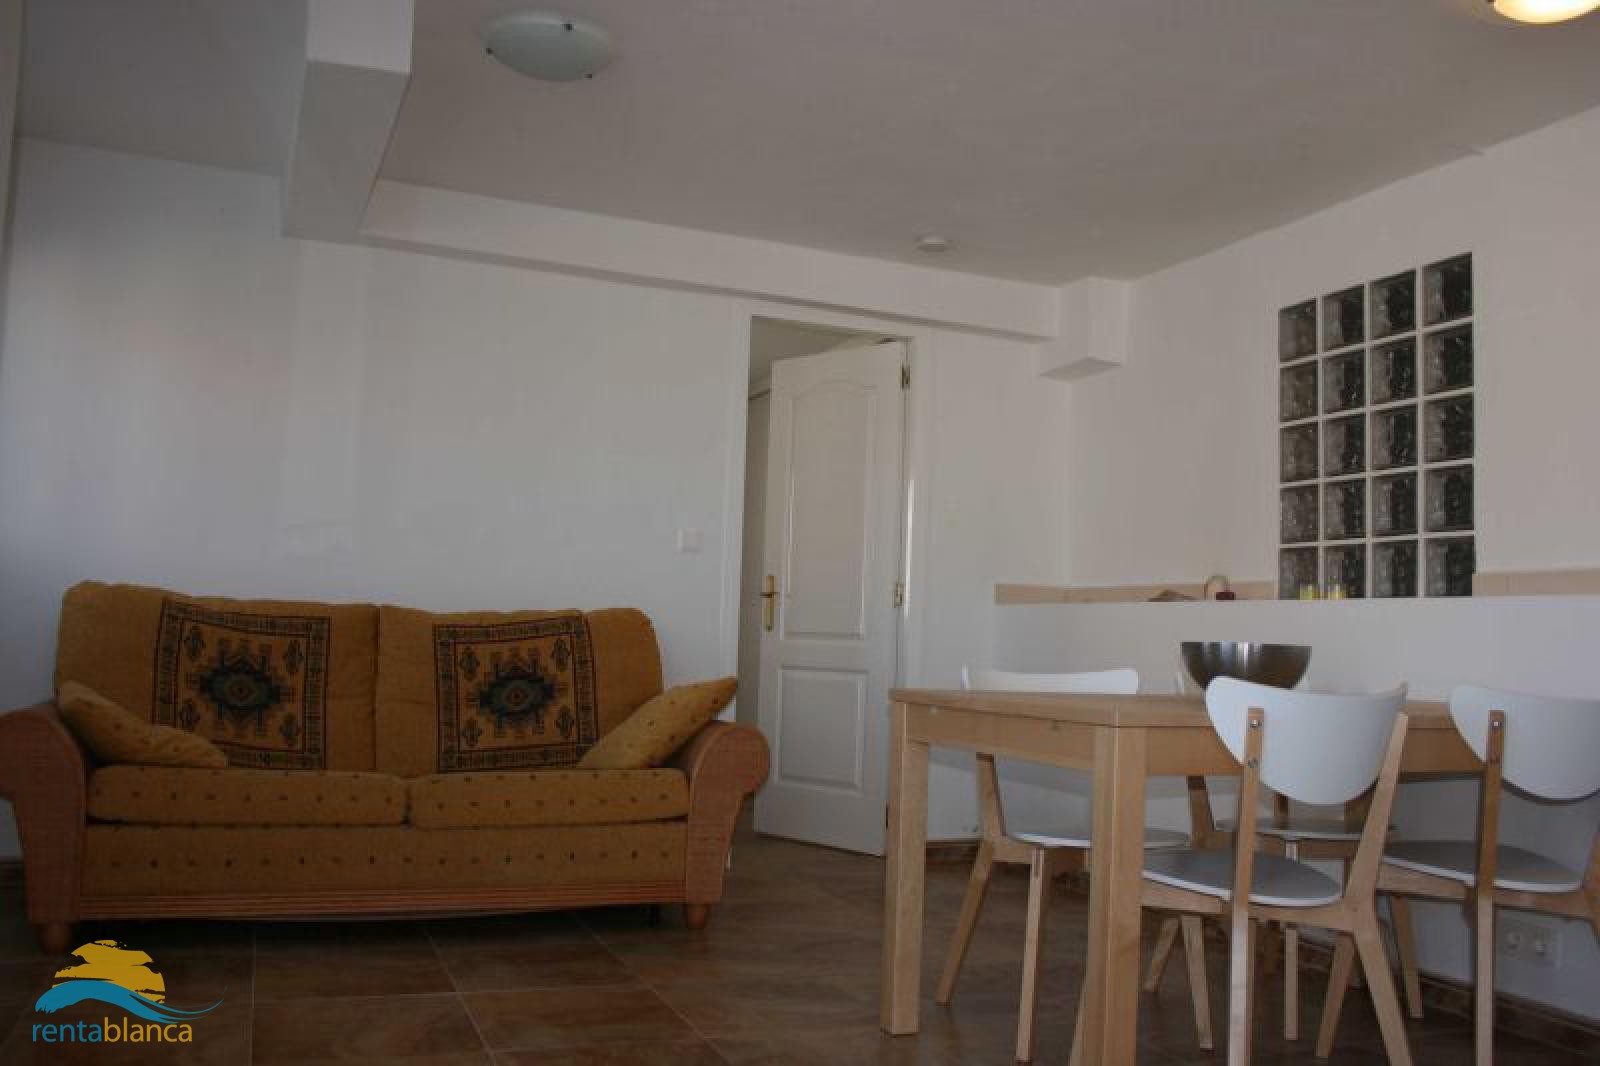 Villa with separate downstairs apartment - Rentablanca